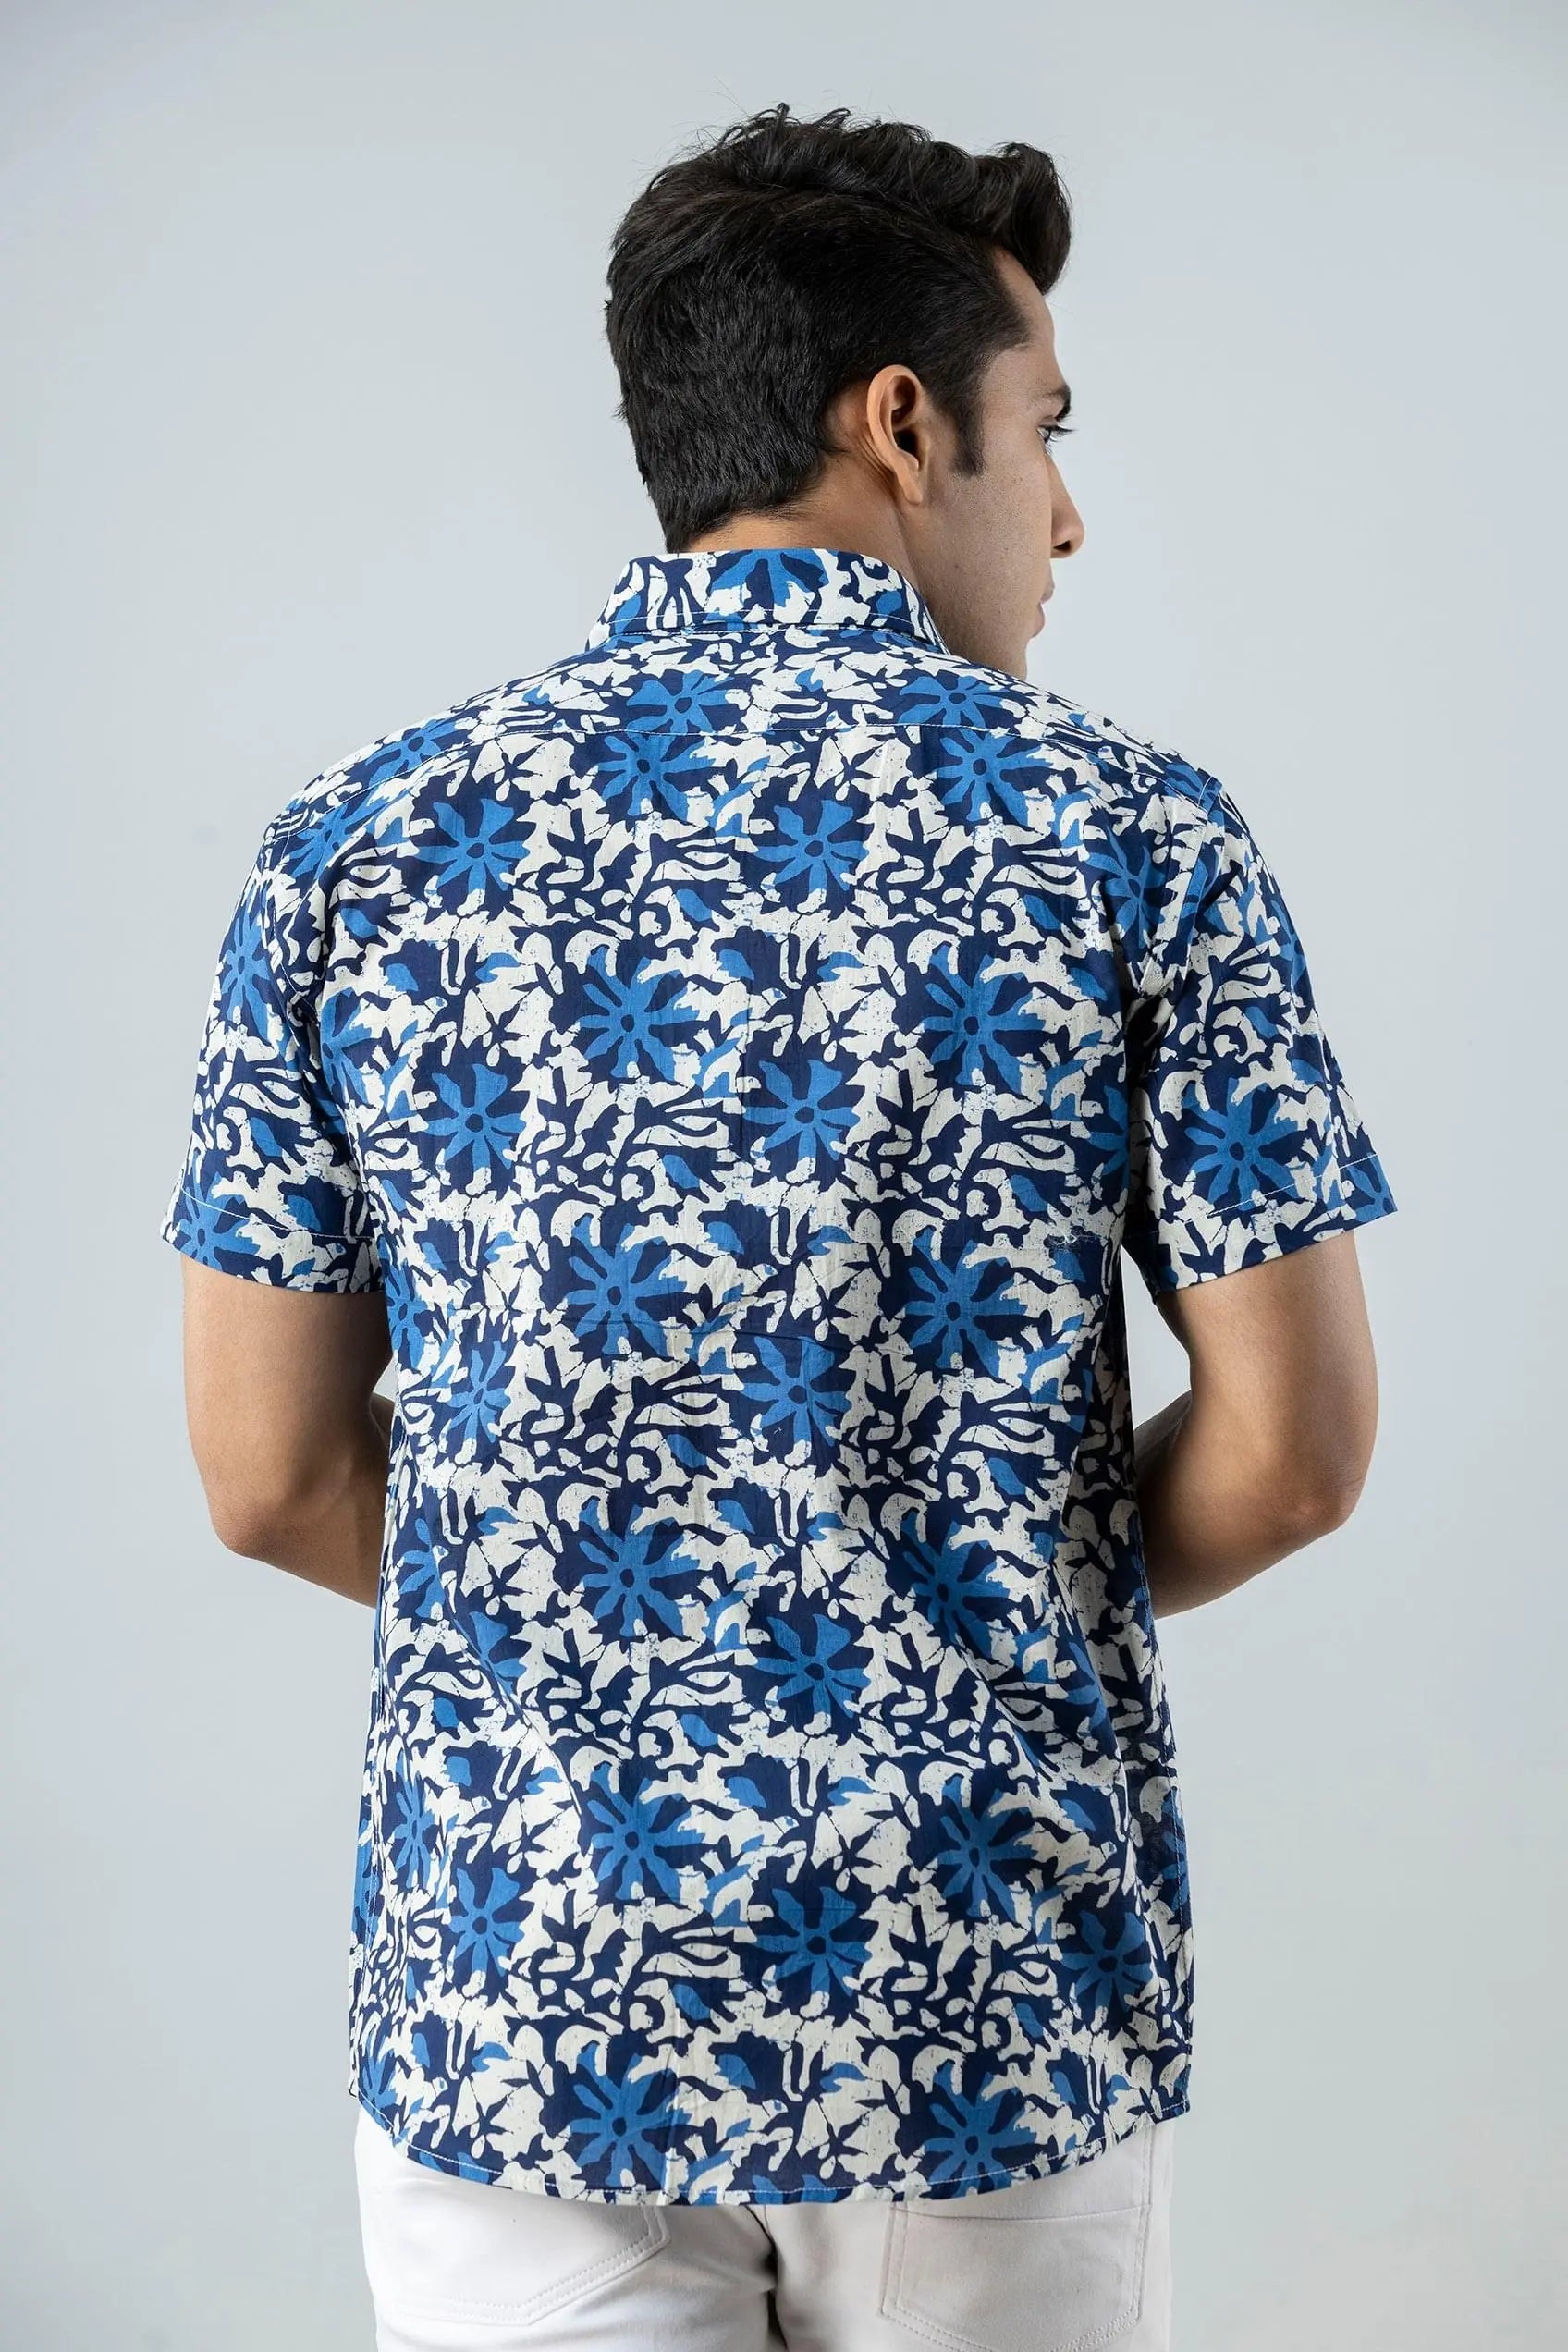 Firangi Yarn Block Printed Cotton Blue Abstract Floral Printed Shirt For Men